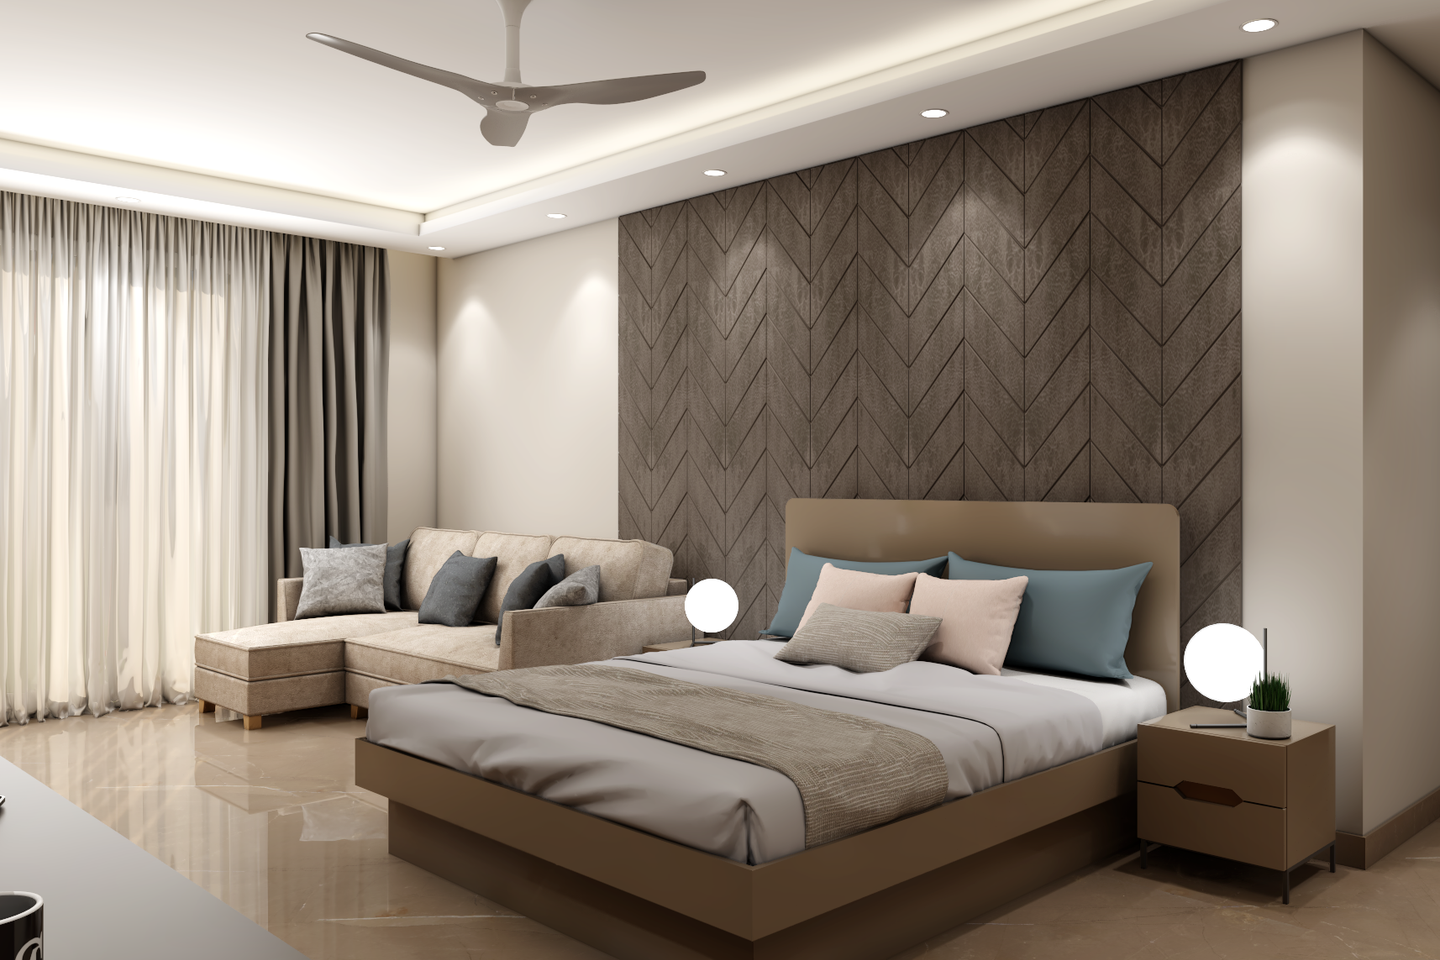 Spacious & Convenient Bedroom Design With Modern Interiors - Livspace